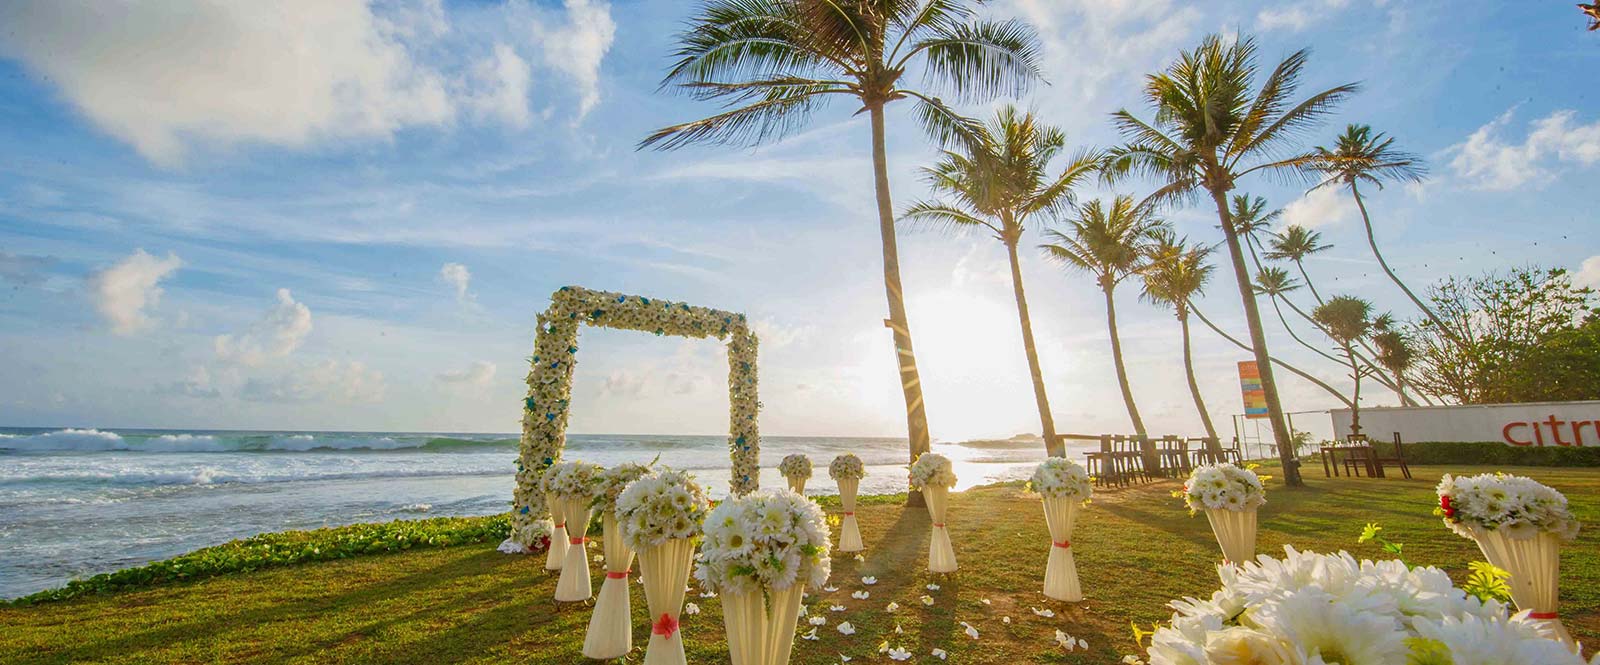 Beach Weddings in Sri Lanka 